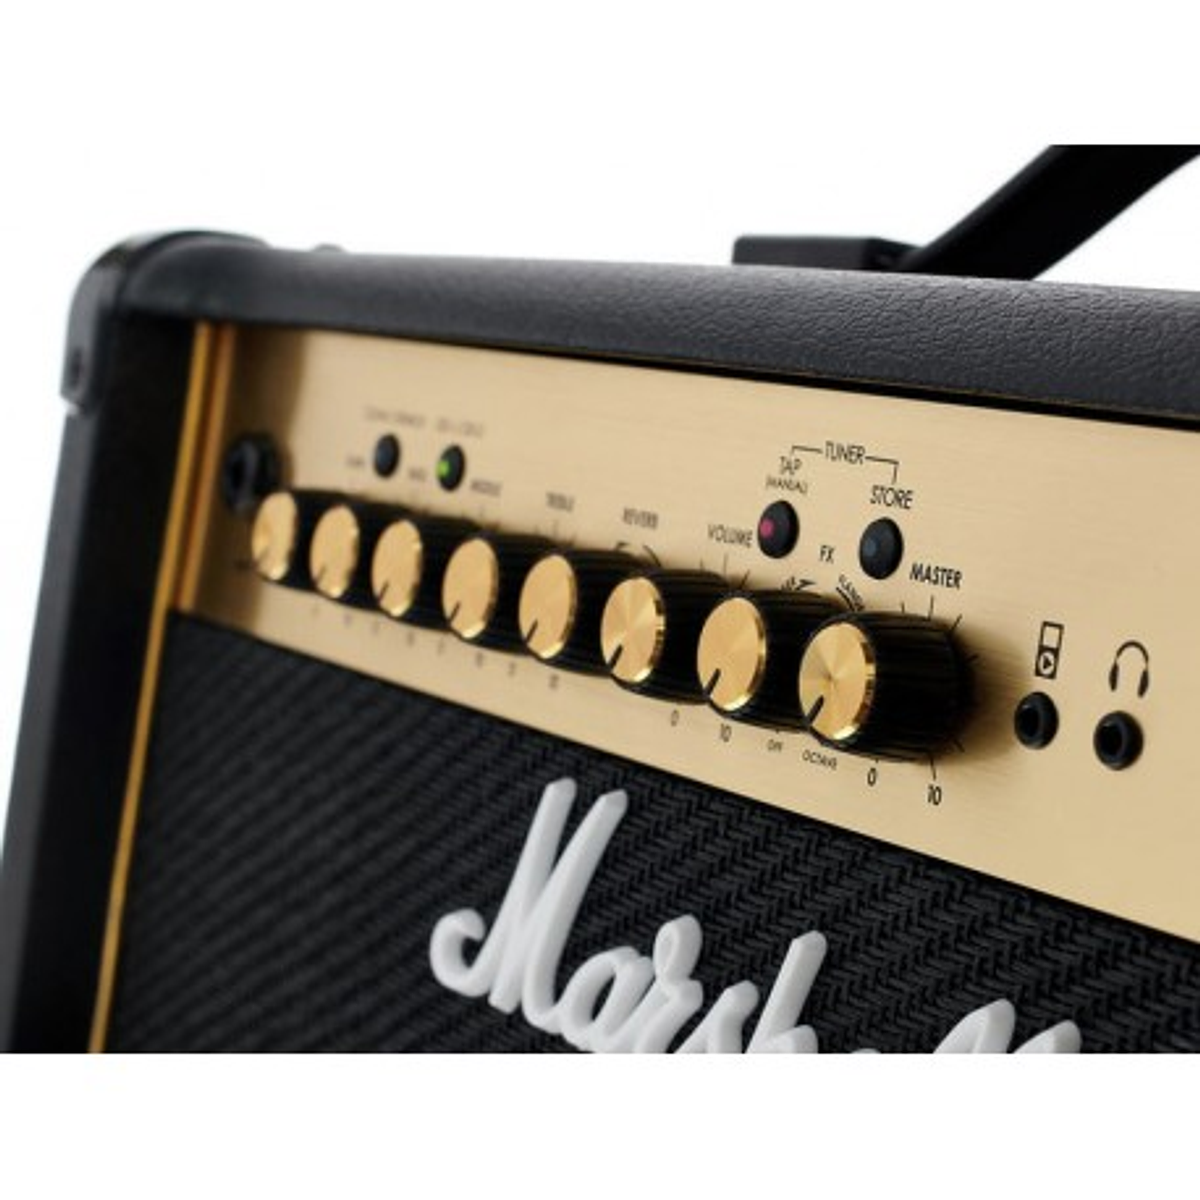 Marshall MG30FX Amplificador guitarra eléctrica